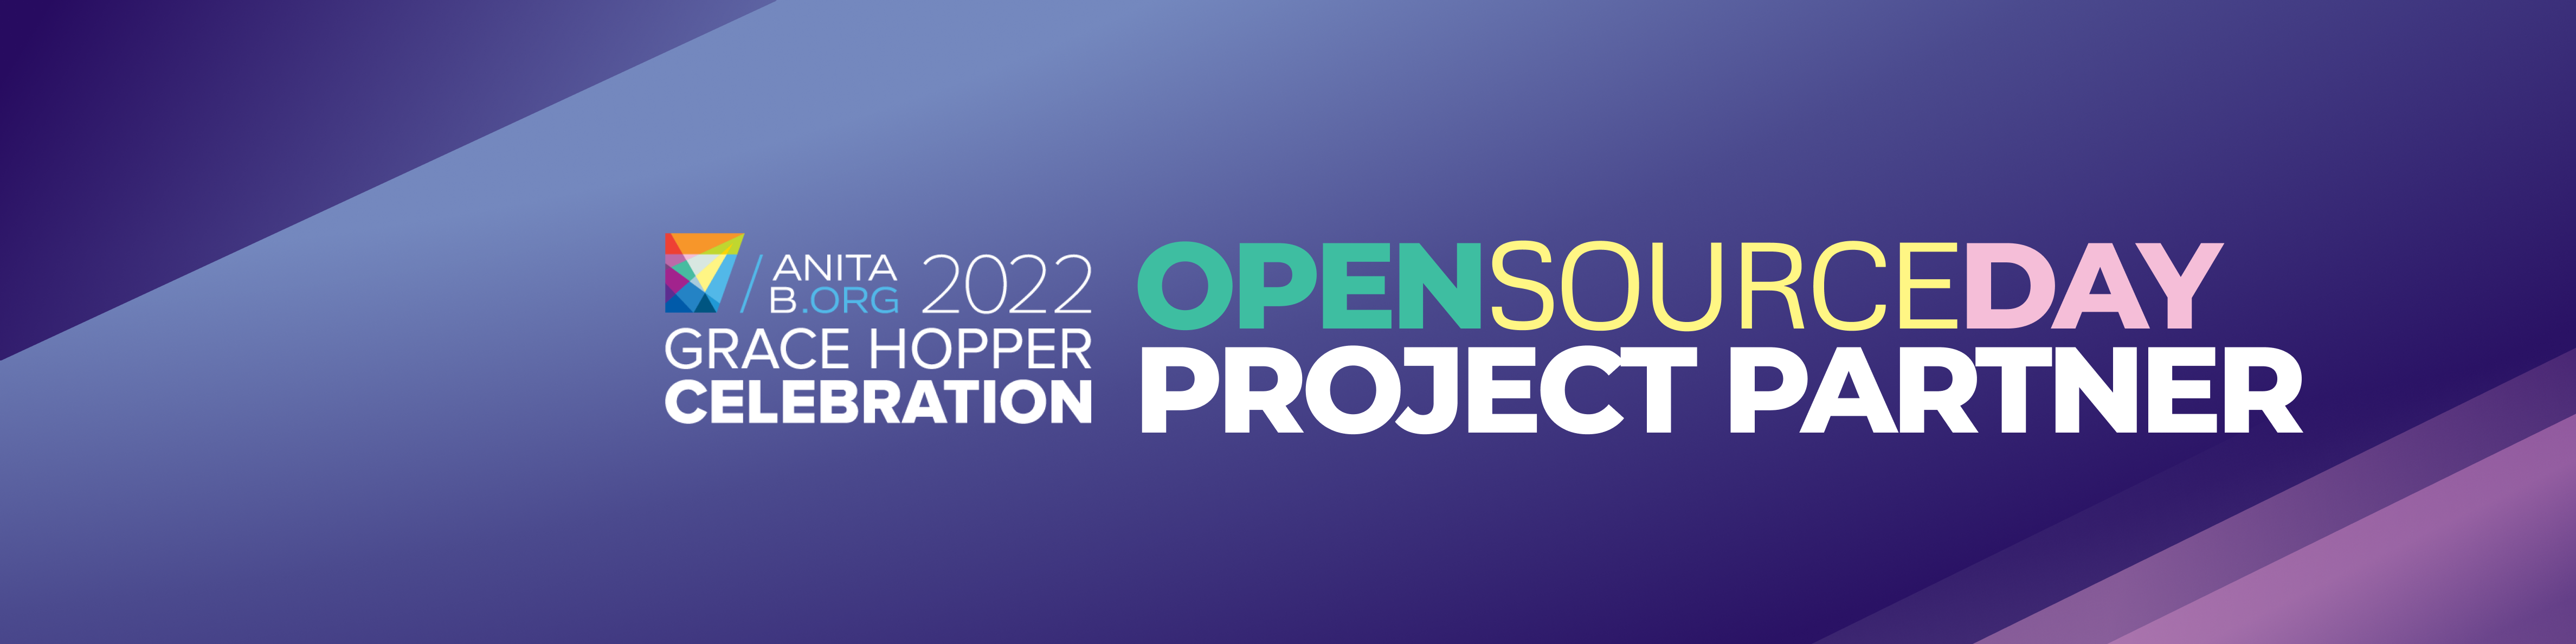 OpenSourceDayProjectBanner2022